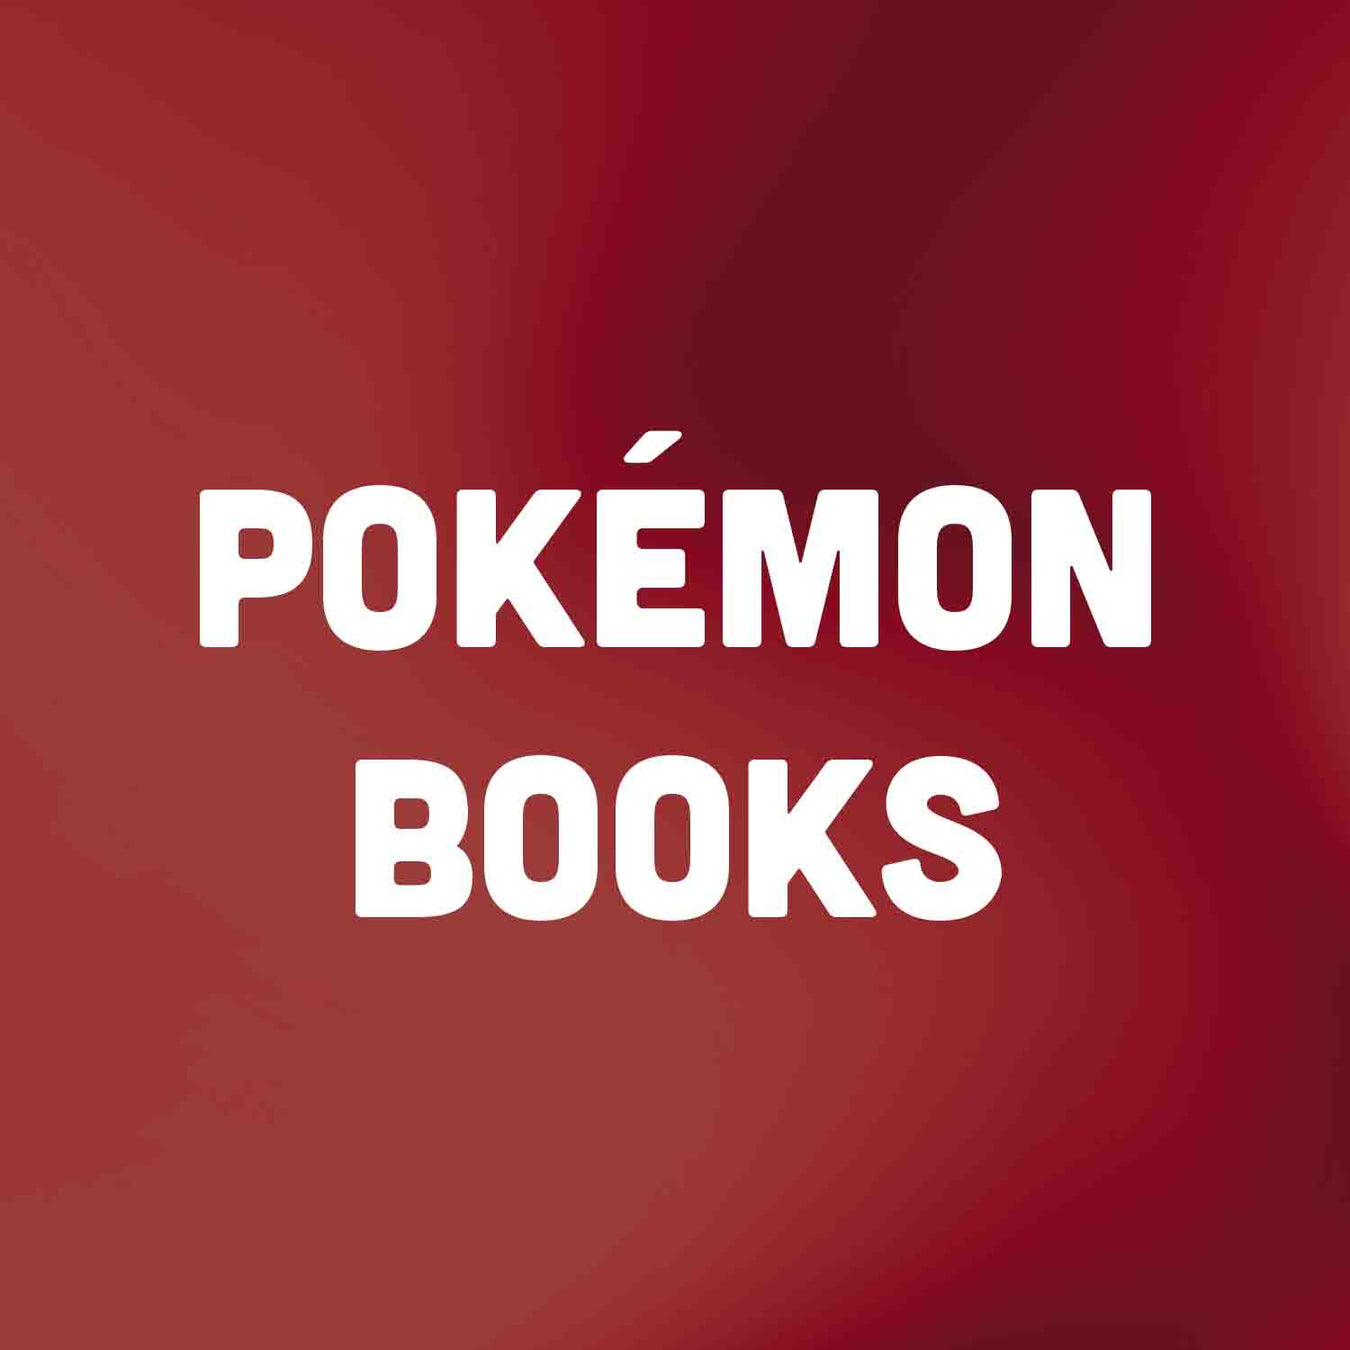 Pokémon Books